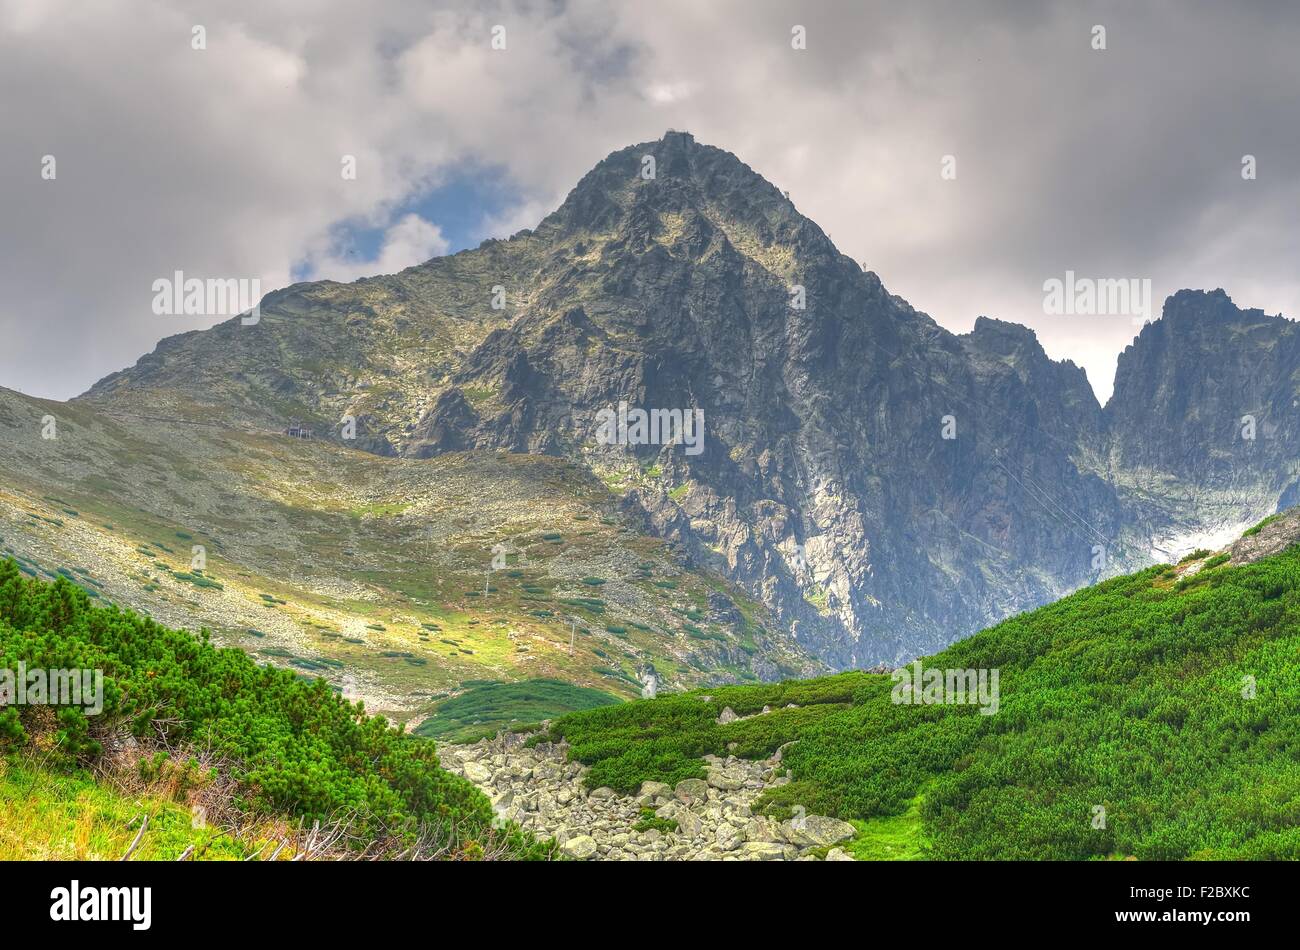 Summer mountain landscape. View on the Lomnicky Stit peak in High Tatra Mountains, Slovakia. Stock Photo